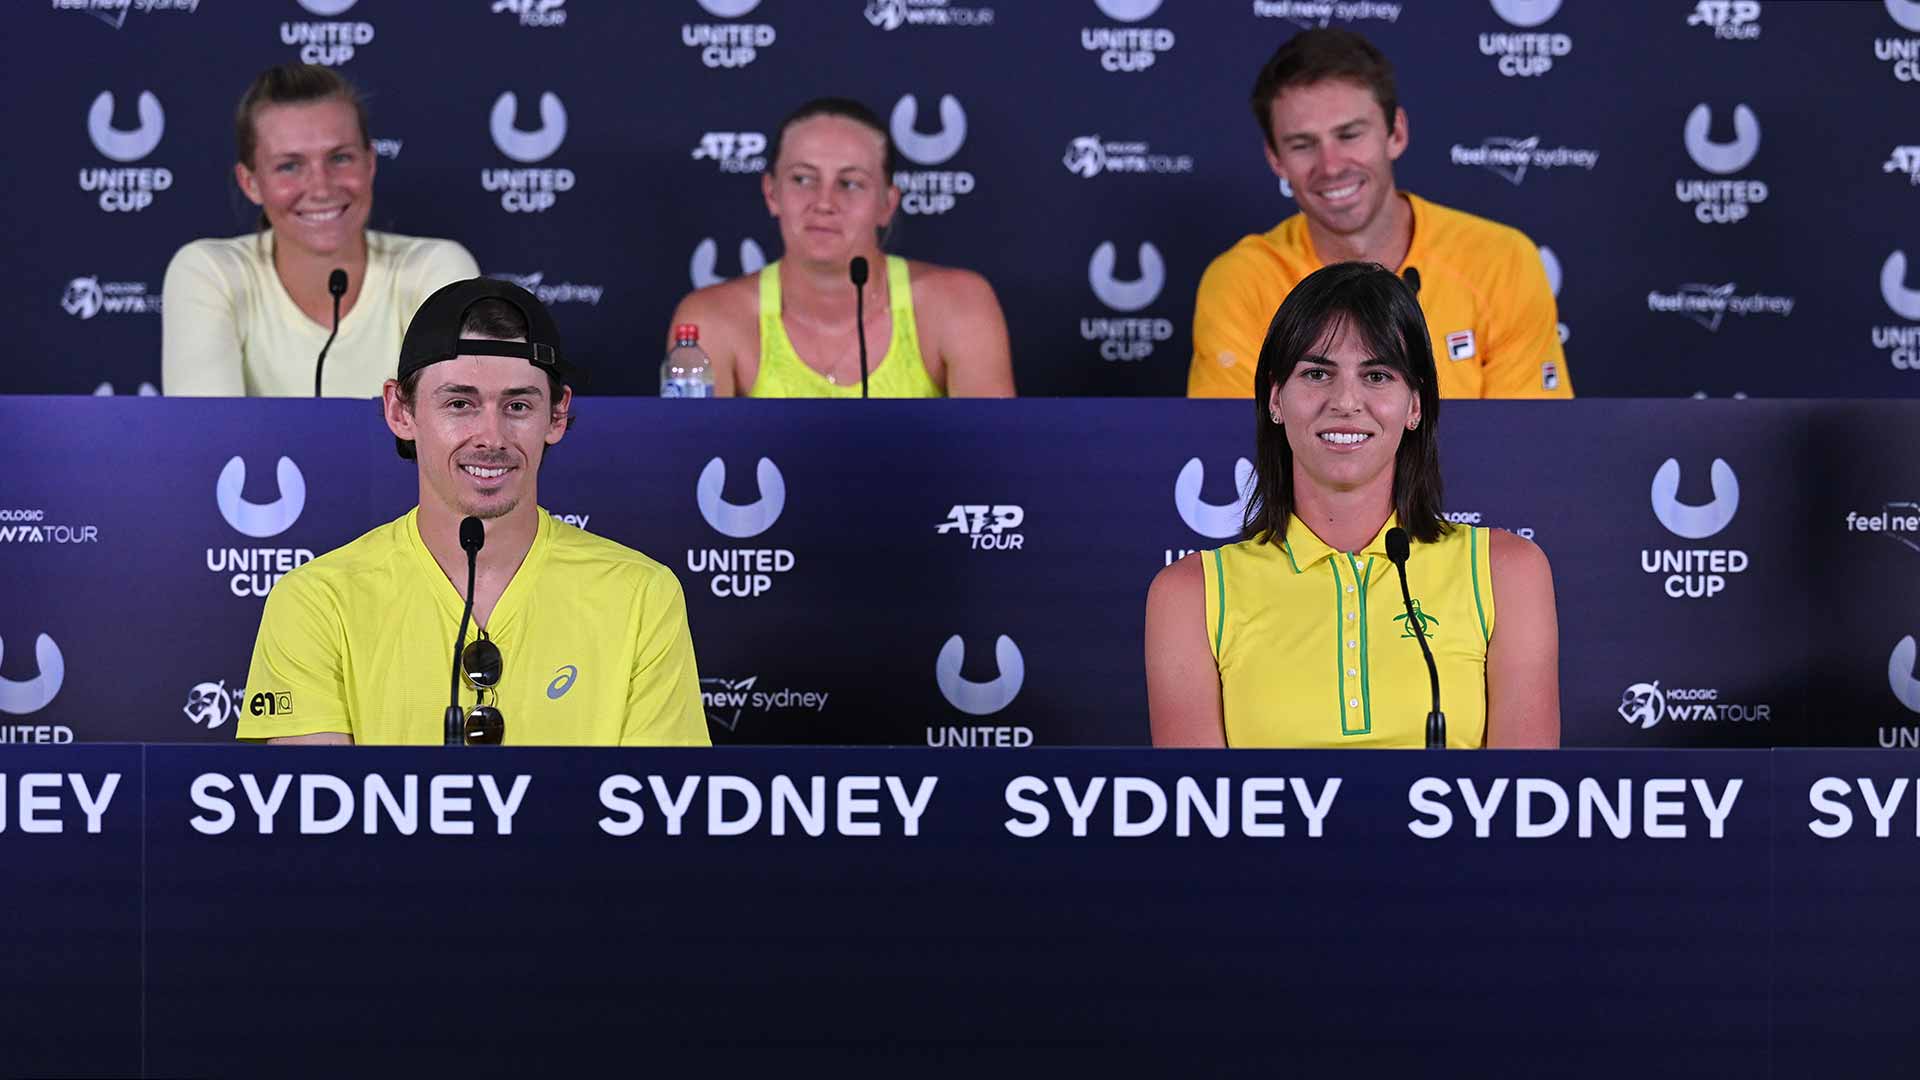 Team Australia will be led by Alex de Minaur and Ajla Tomljanovic in Sydney.